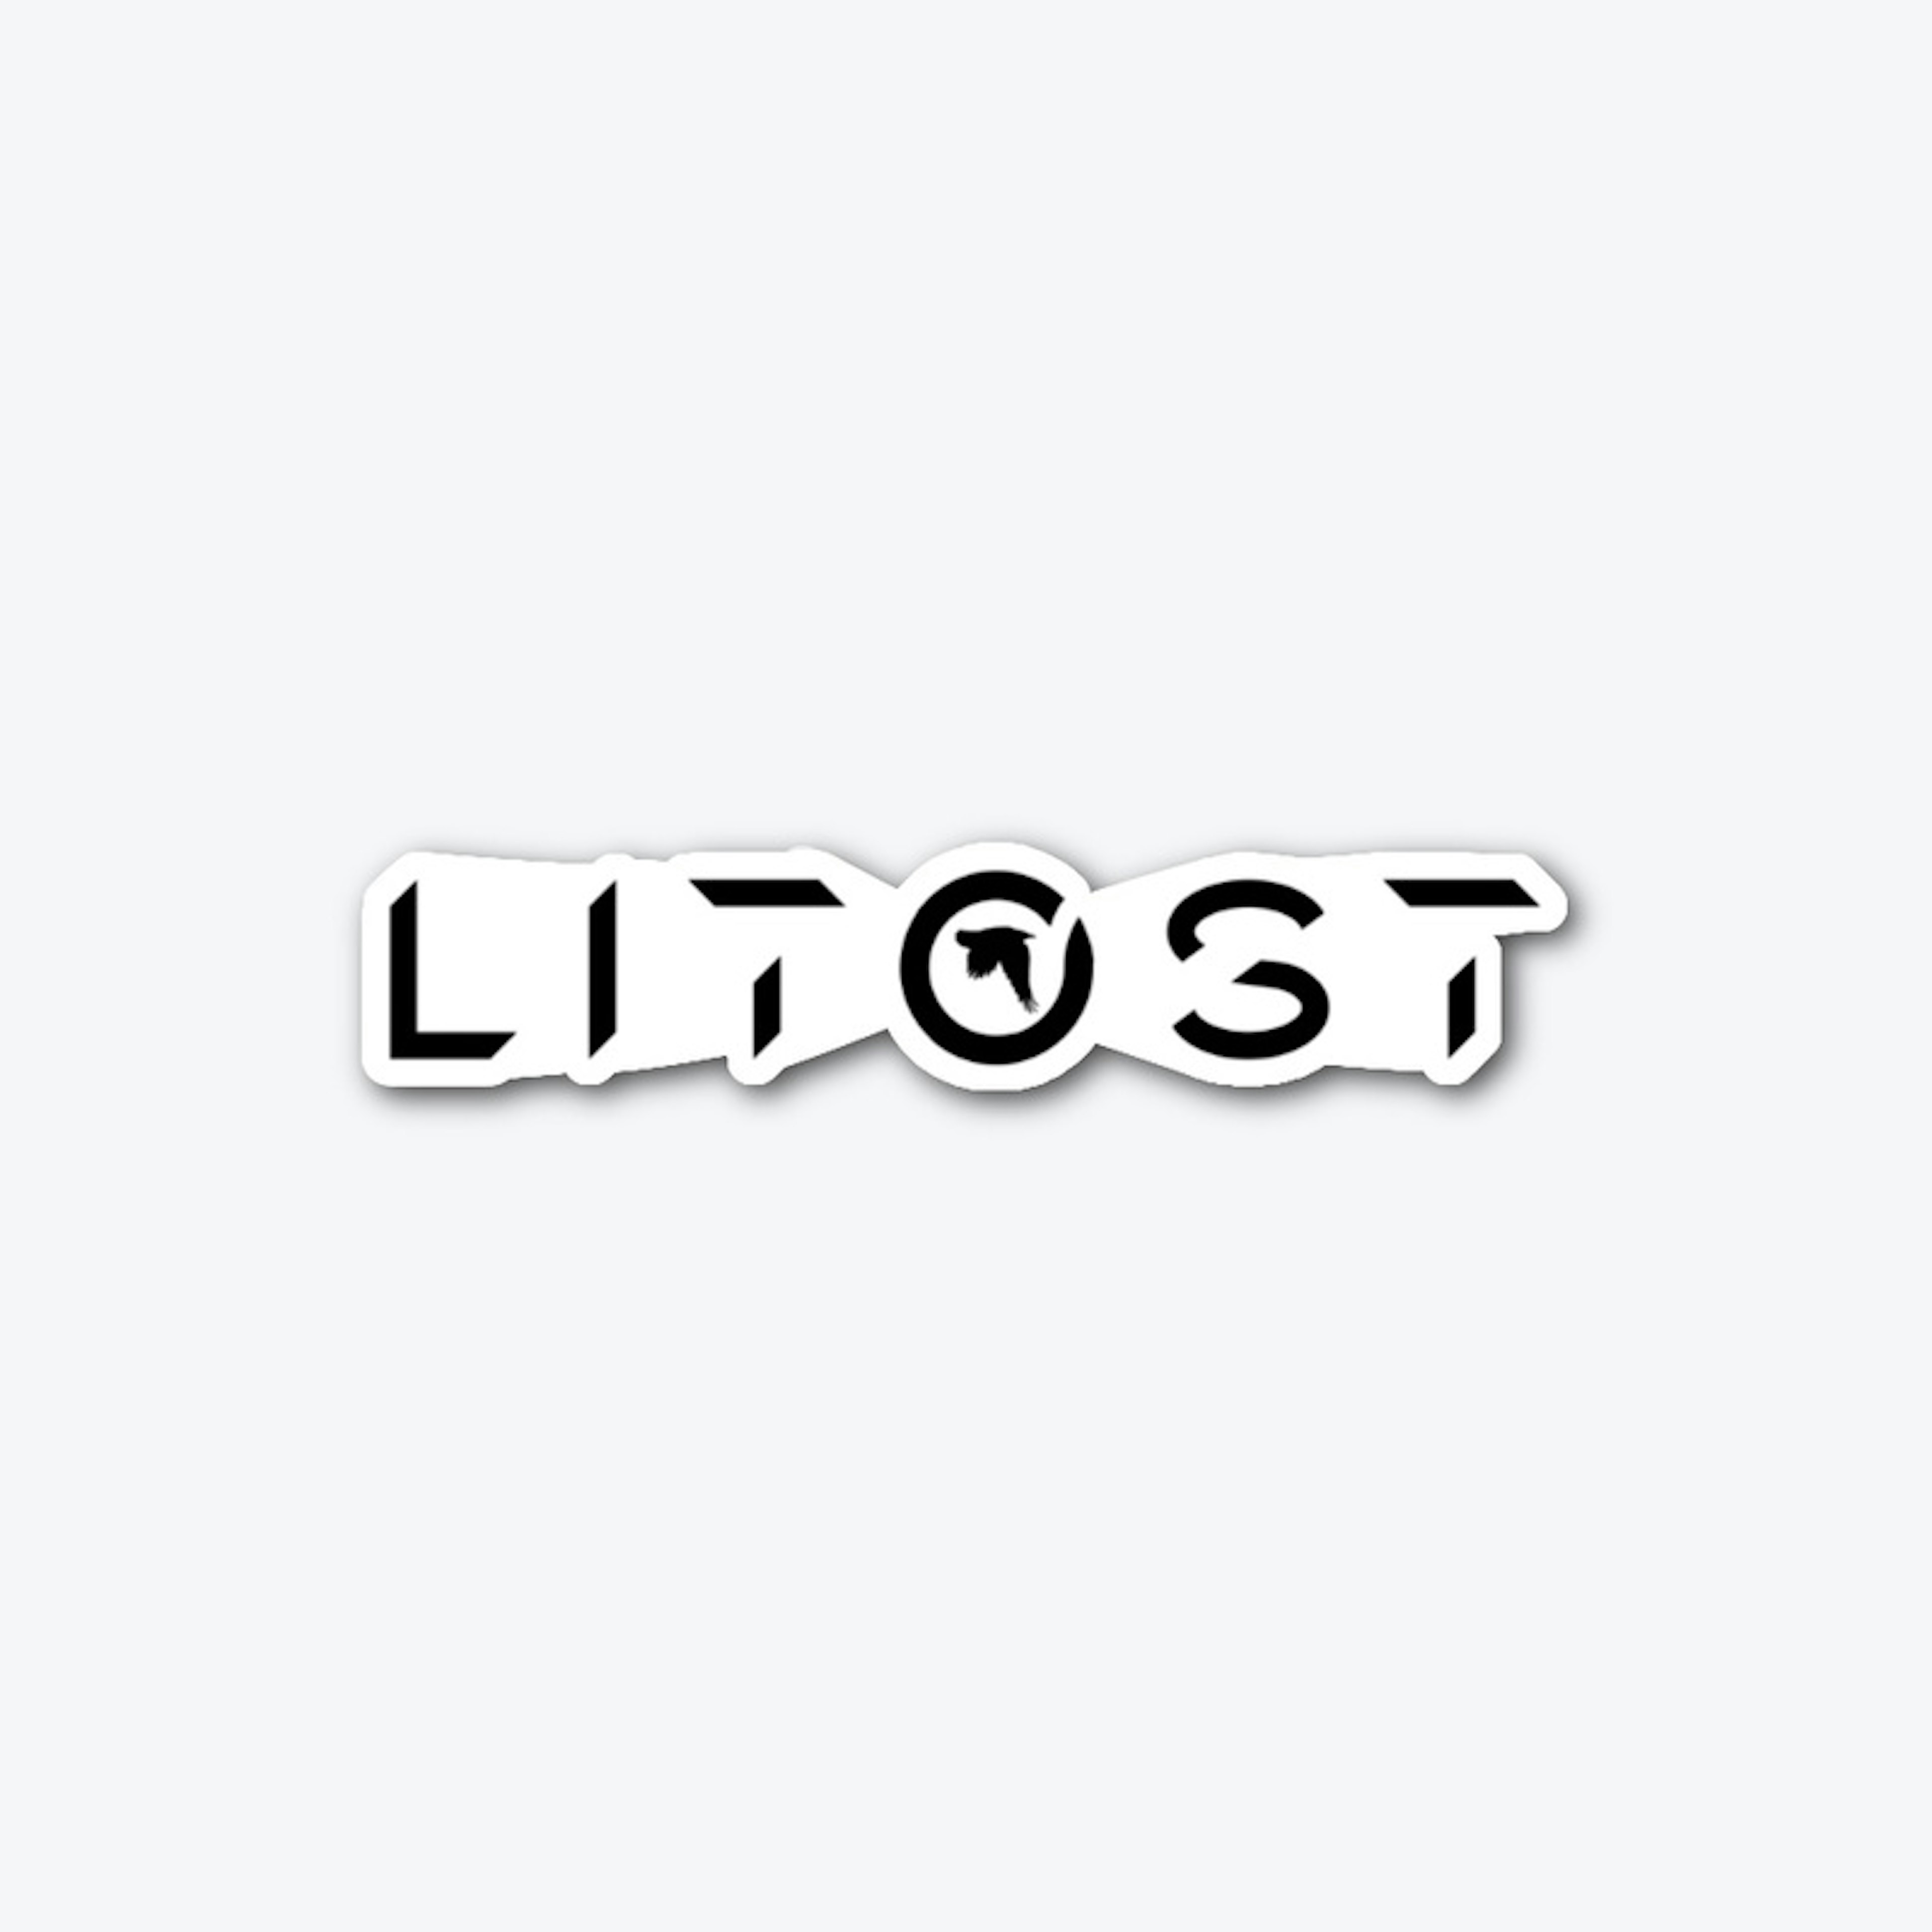 Litost Script Collection